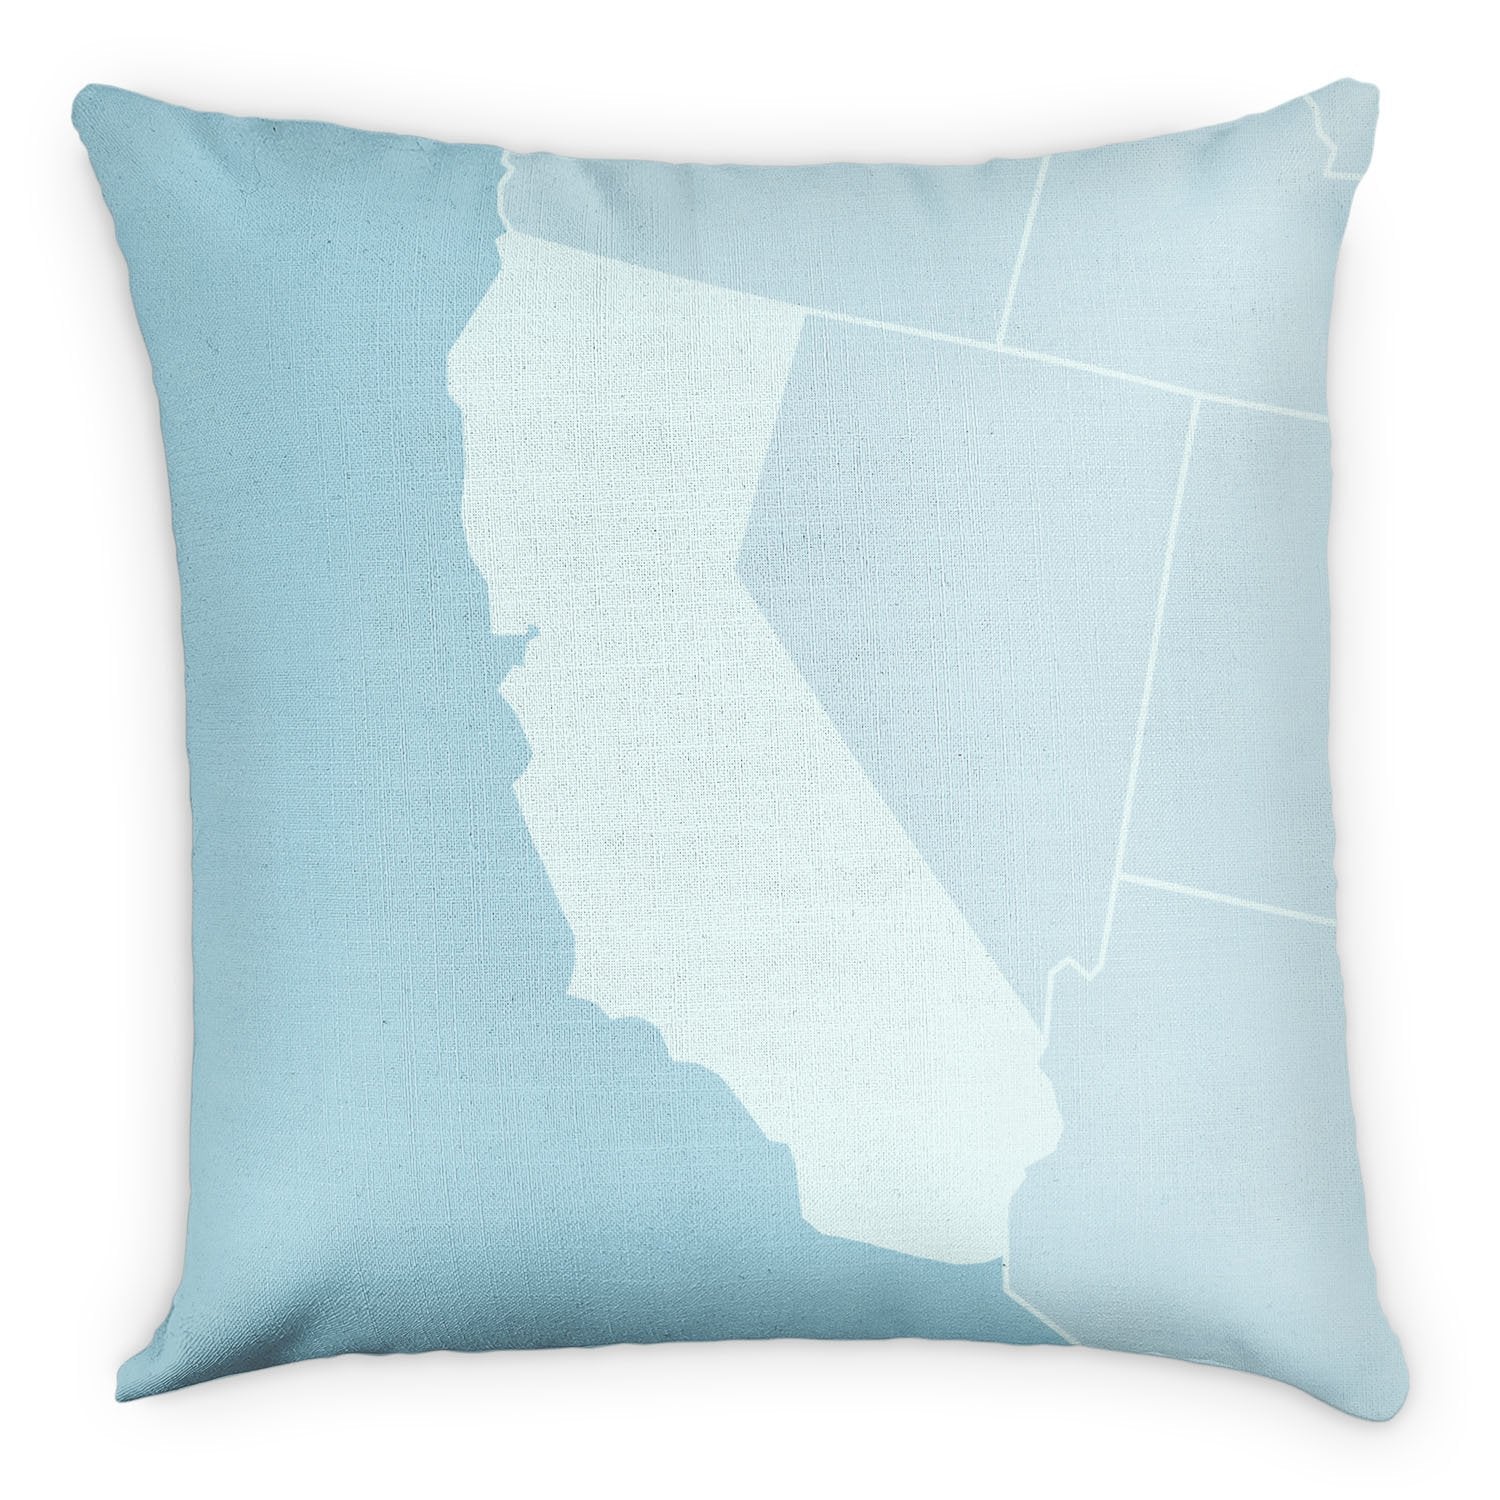 California Square Pillow - Linen -  - Knotty Tie Co.